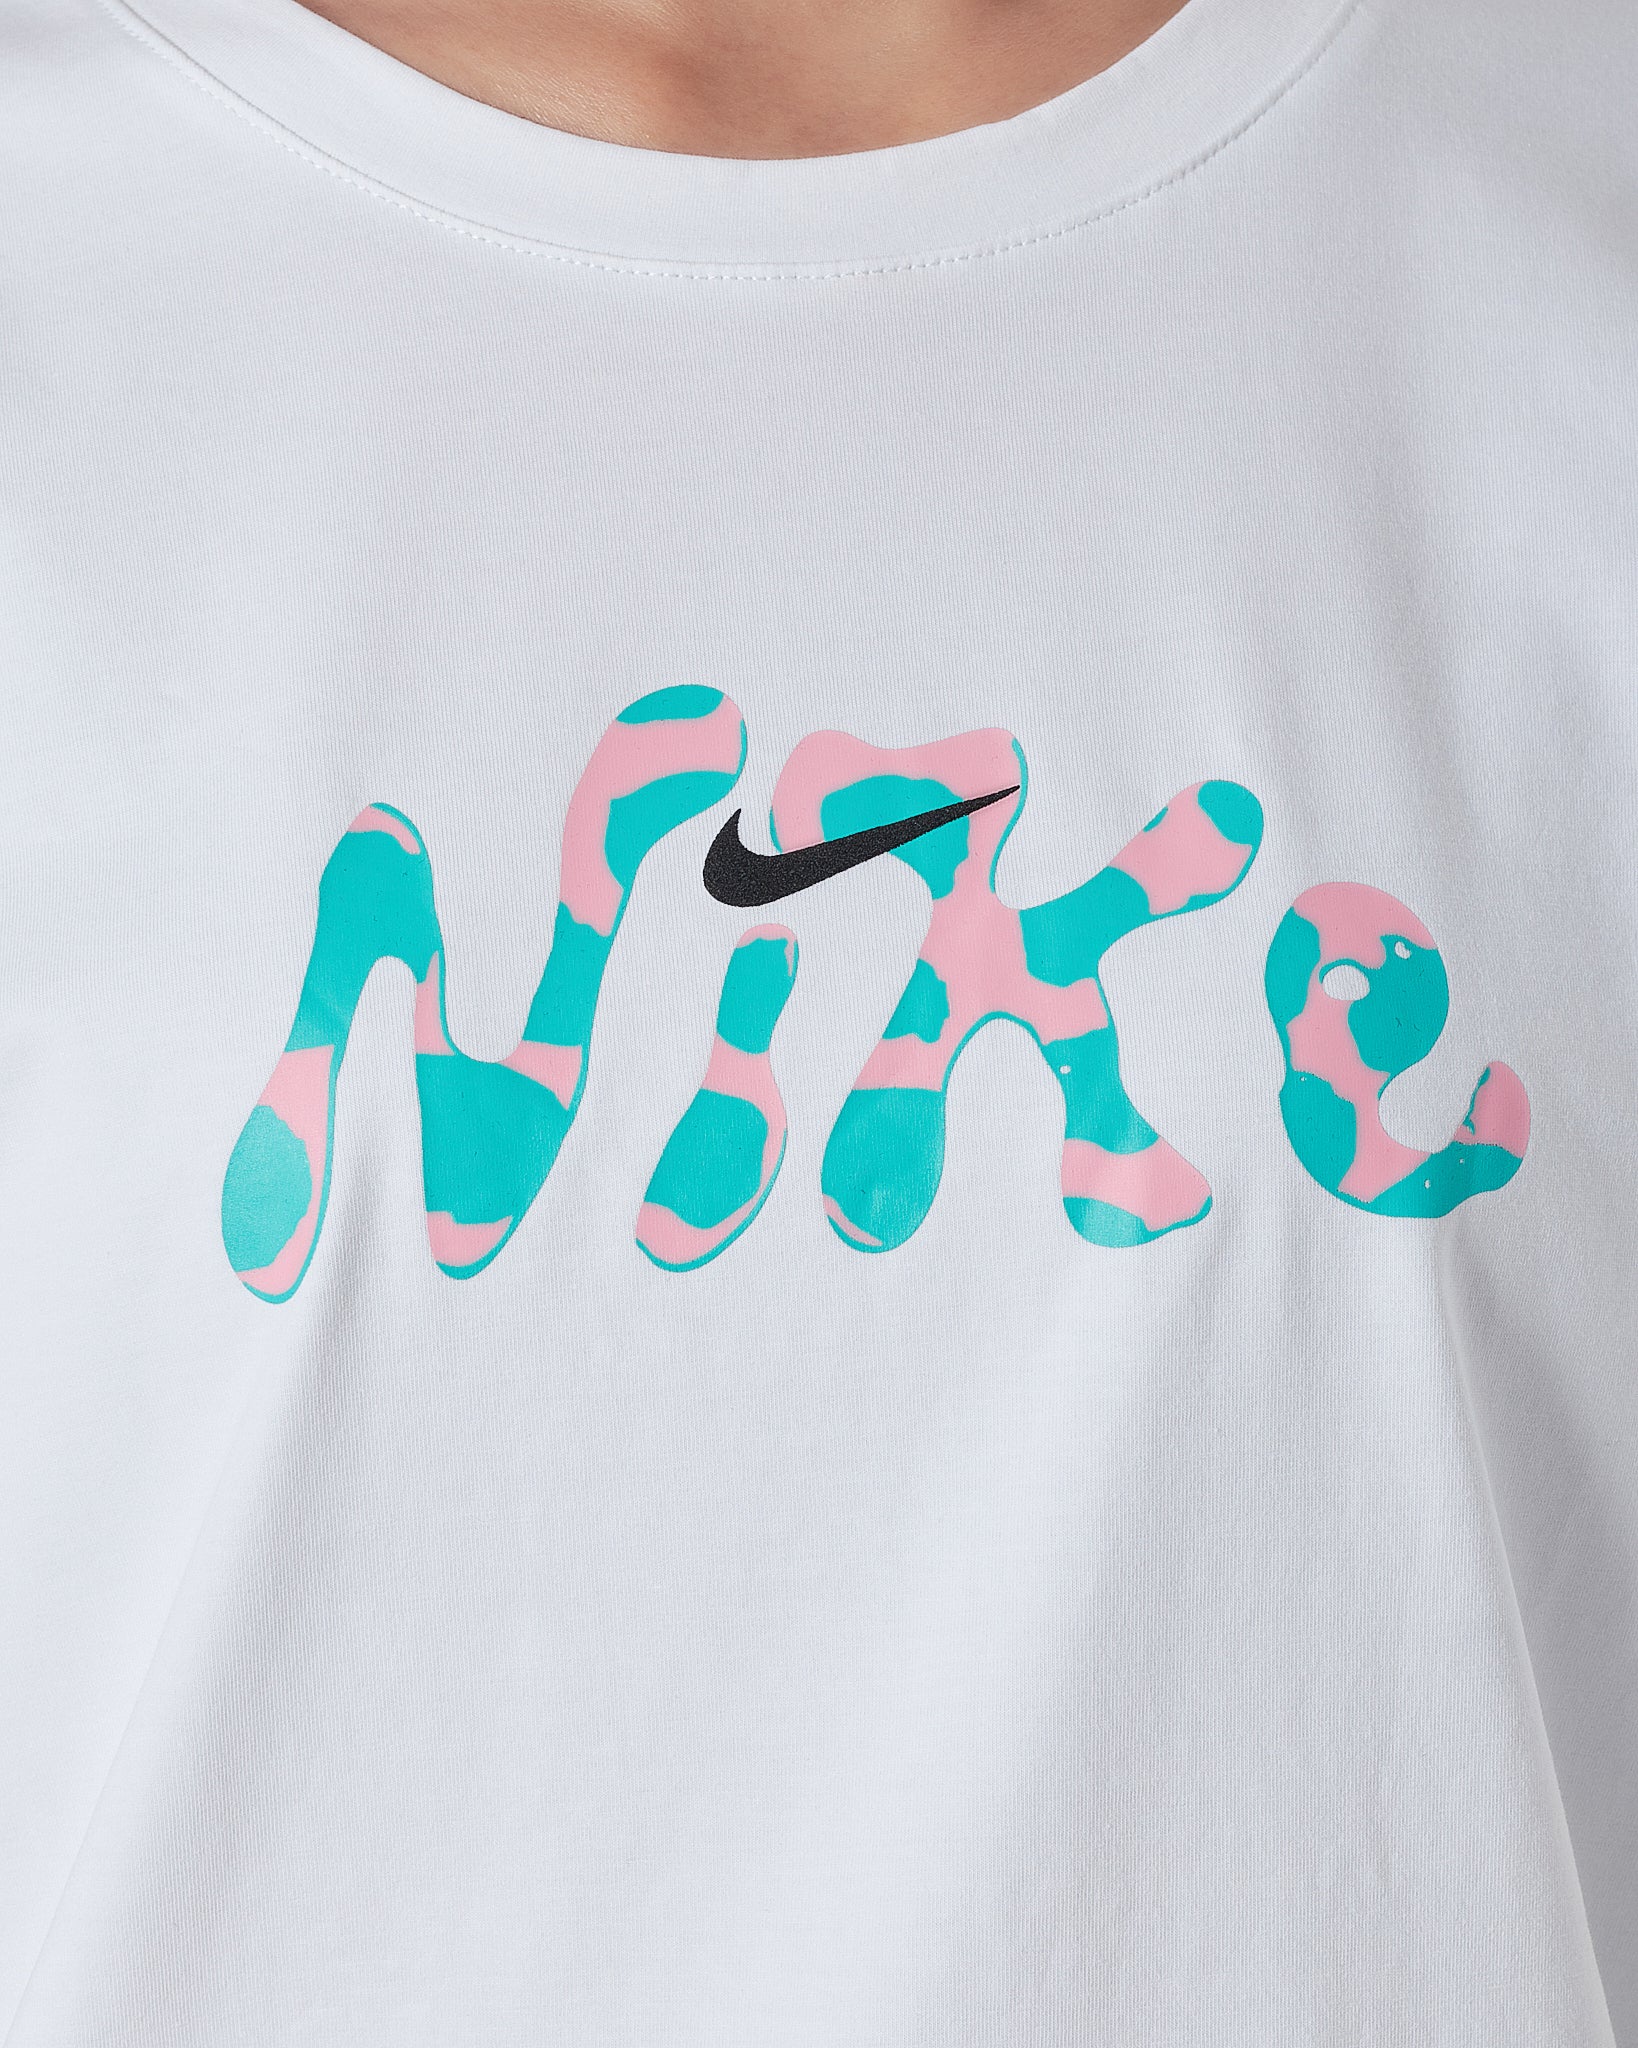 NIK Graffiti Logo Lady White T-Shirt 13.90